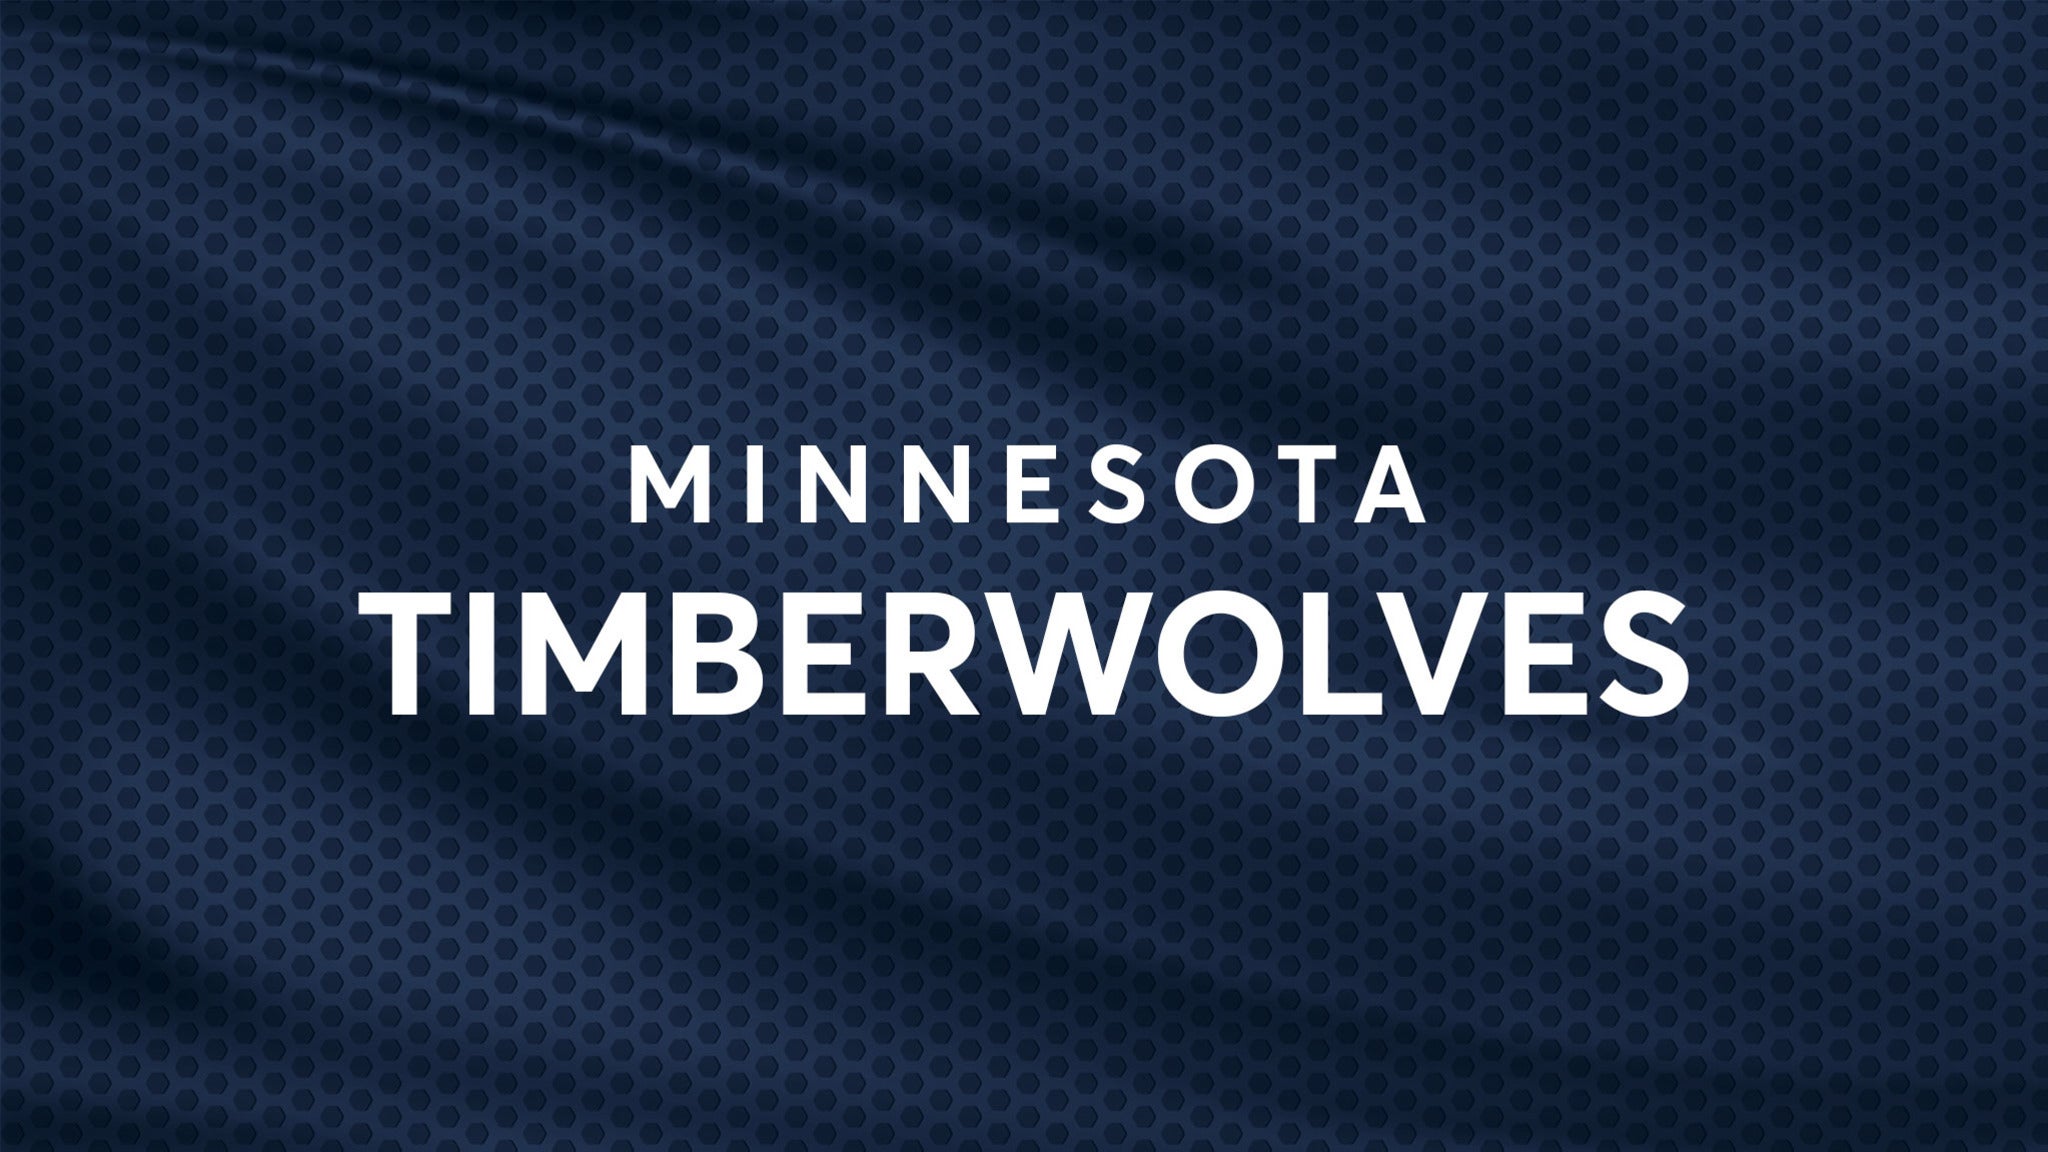 Minnesota Timberwolves vs. Los Angeles Lakers - Minneapolis, MN 55403